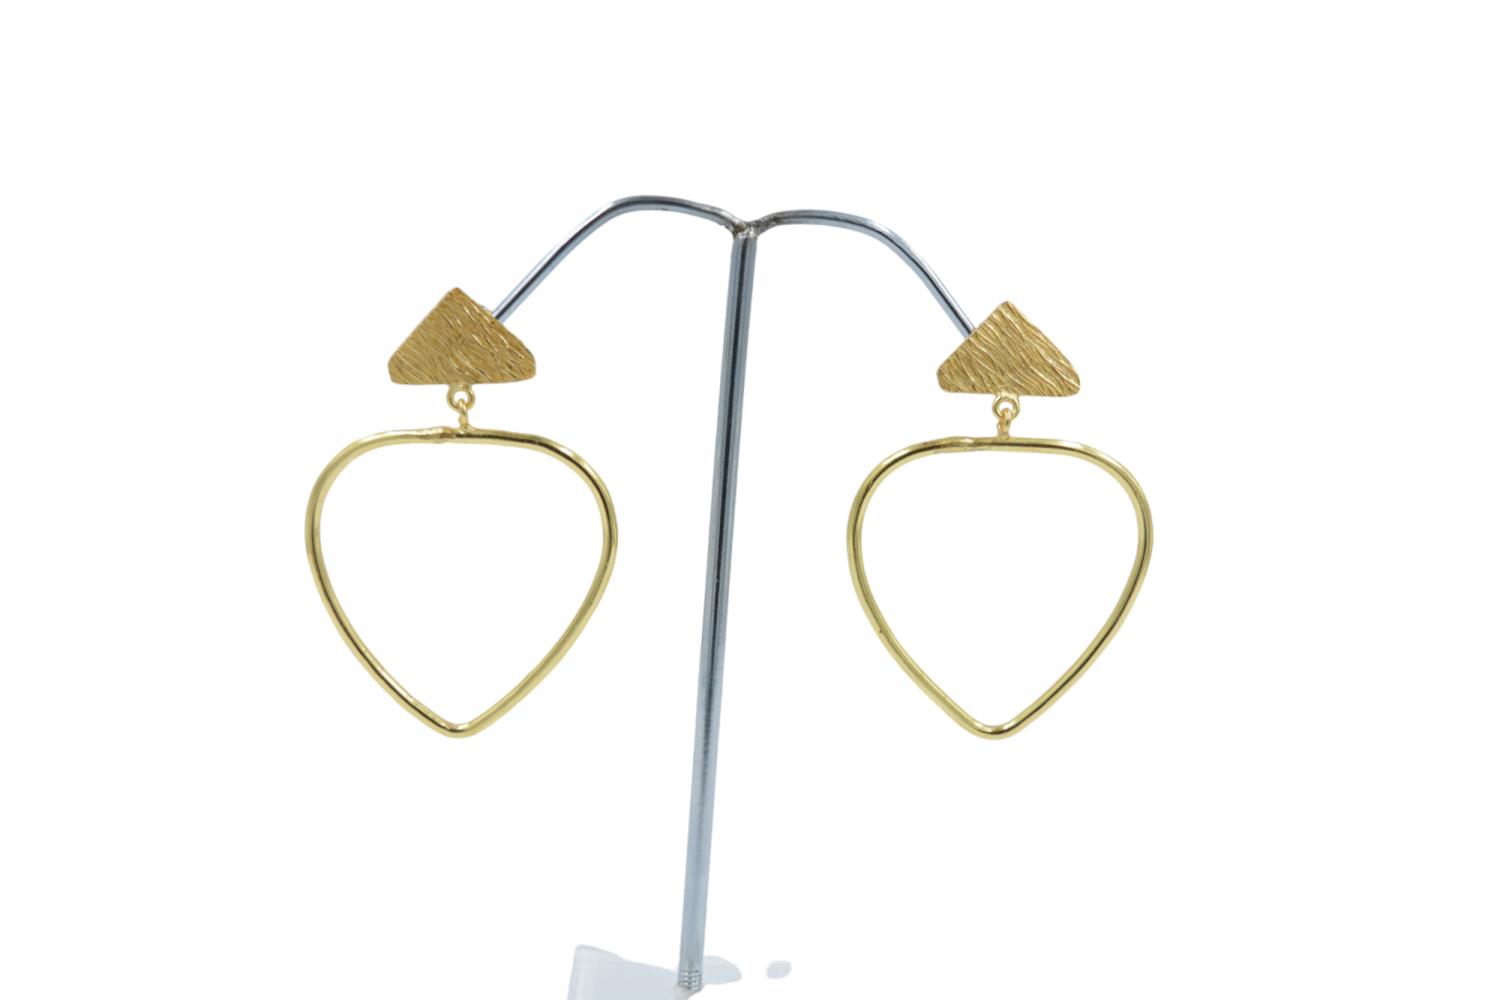 Best Selling Elegant Gold Plated Earrings for Women heart Gold Plated brass Earring Available at Bulk Price